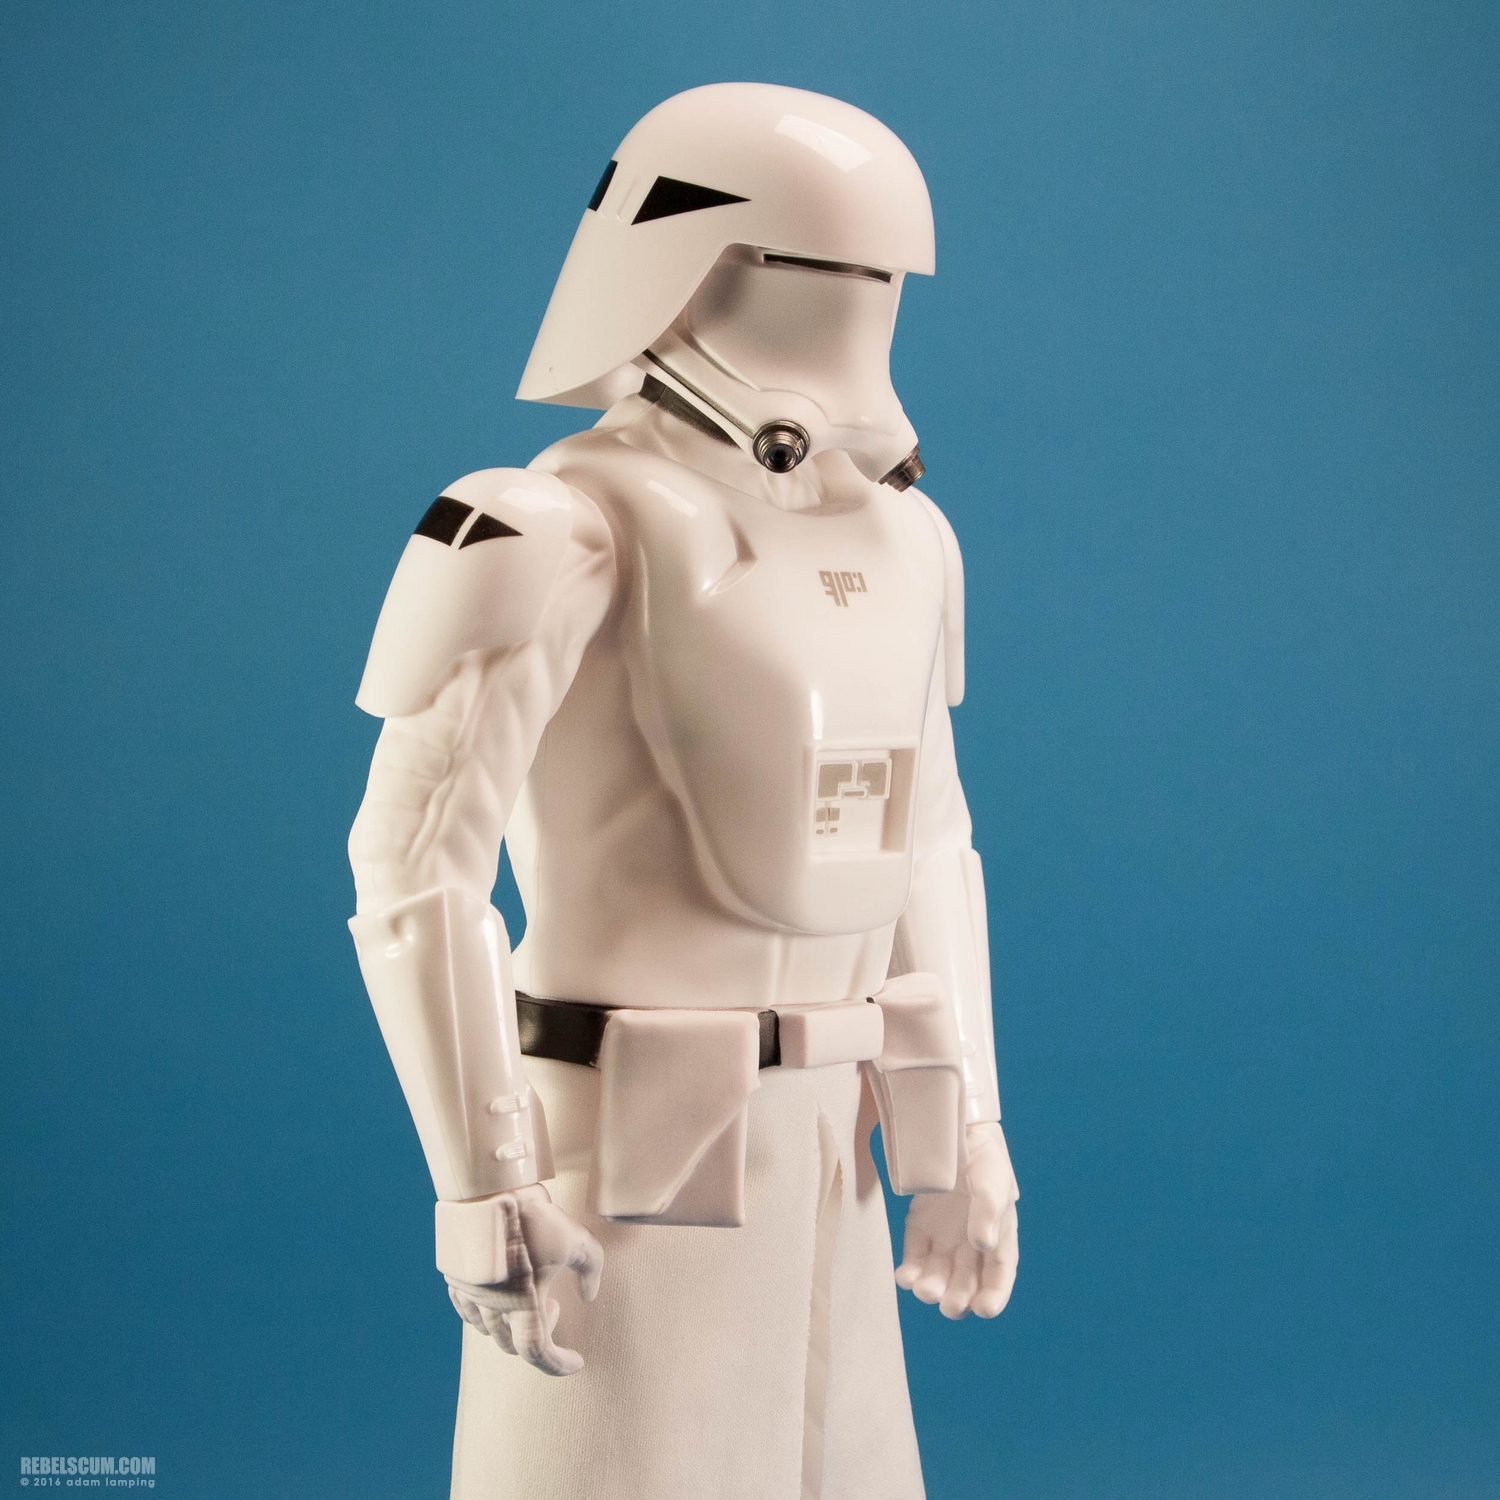 jakks-pacific-first-order-snowtrooper-18-inch-figure-006.jpg